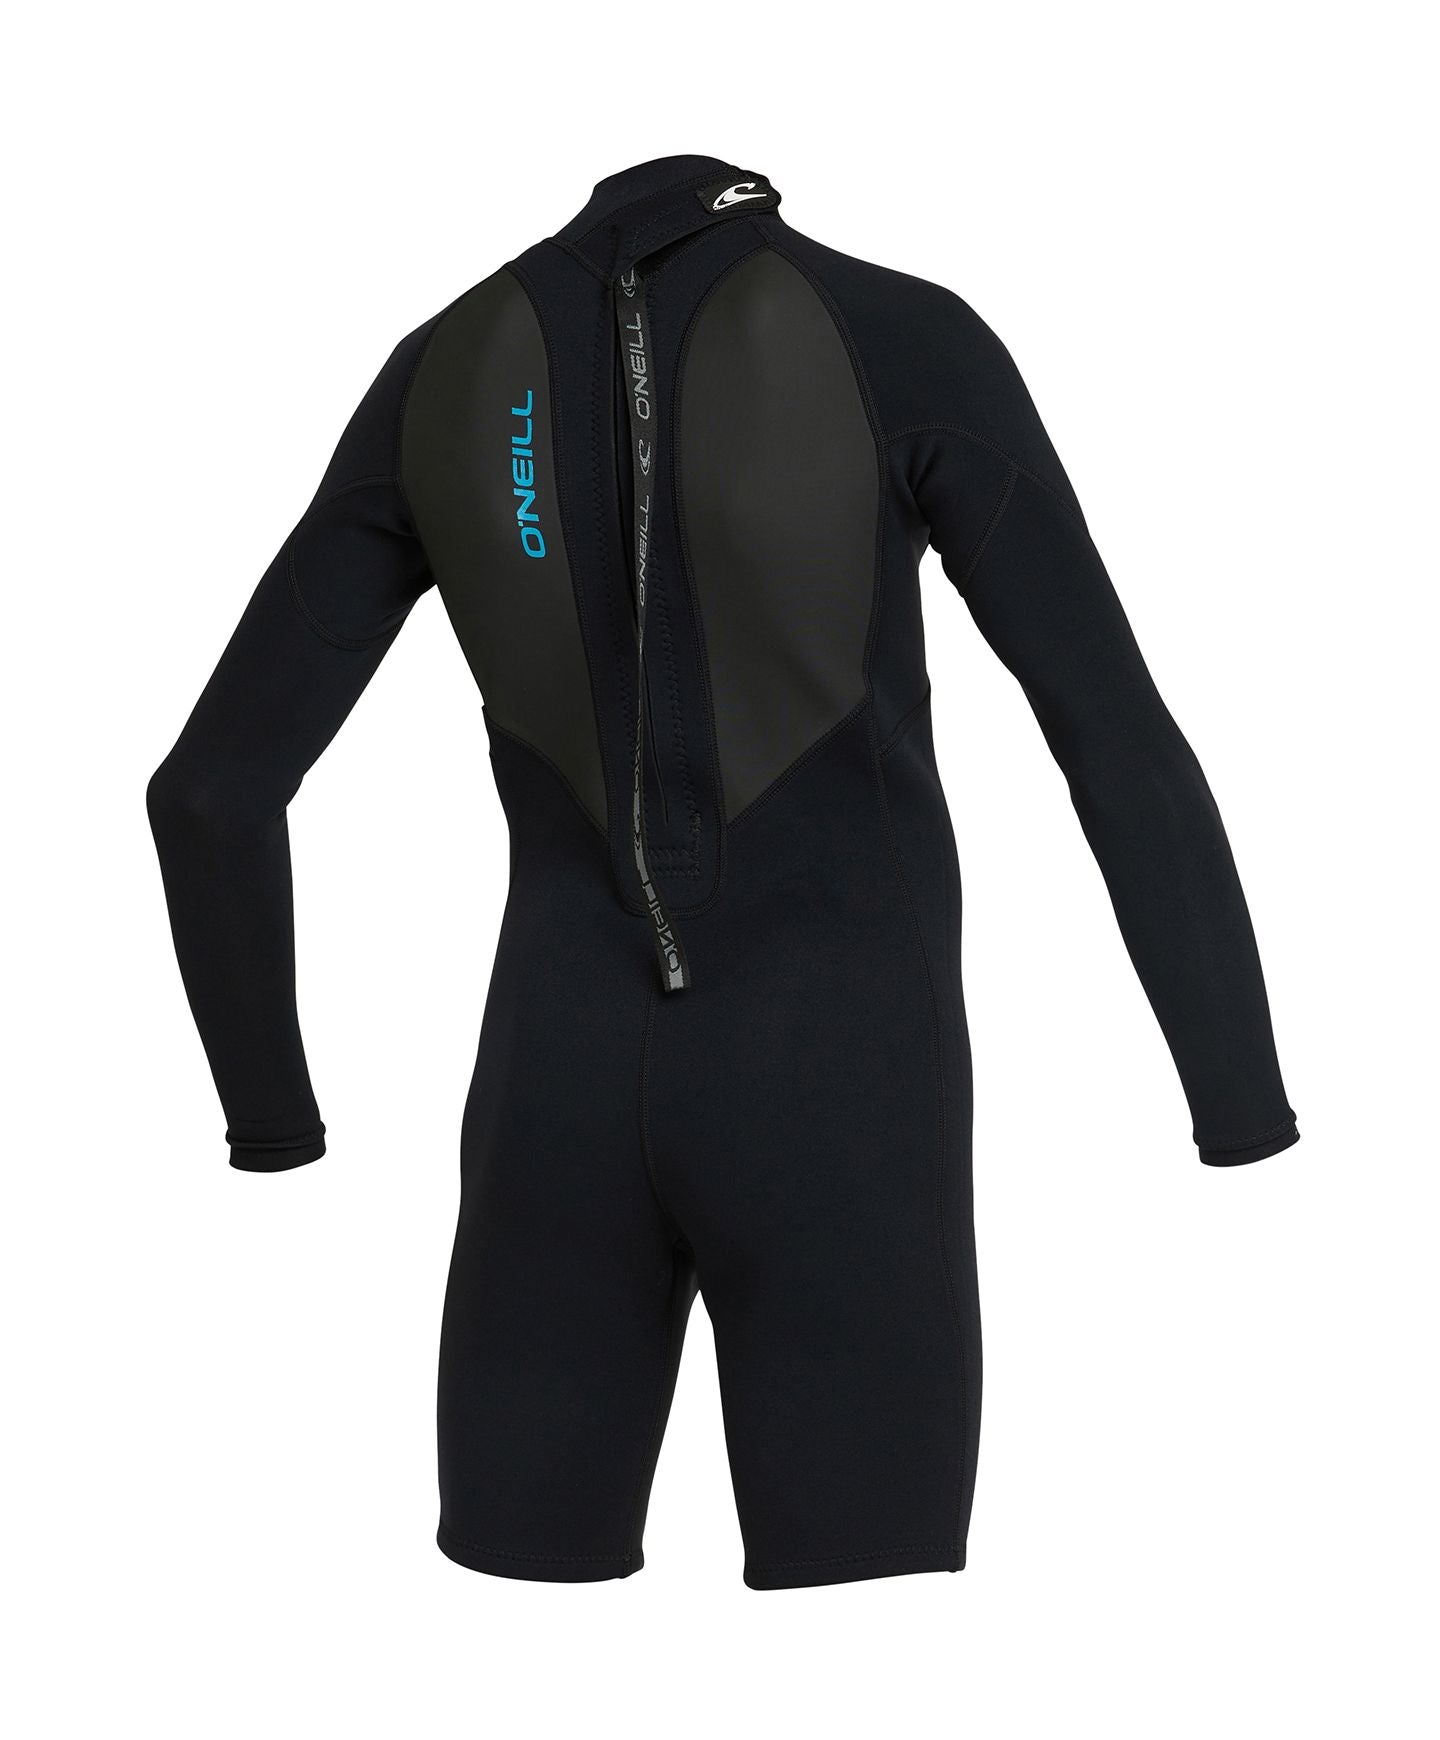 Boy's Reactor 2mm Long Sleeve Spring Suit BZ Wetsuit - Black